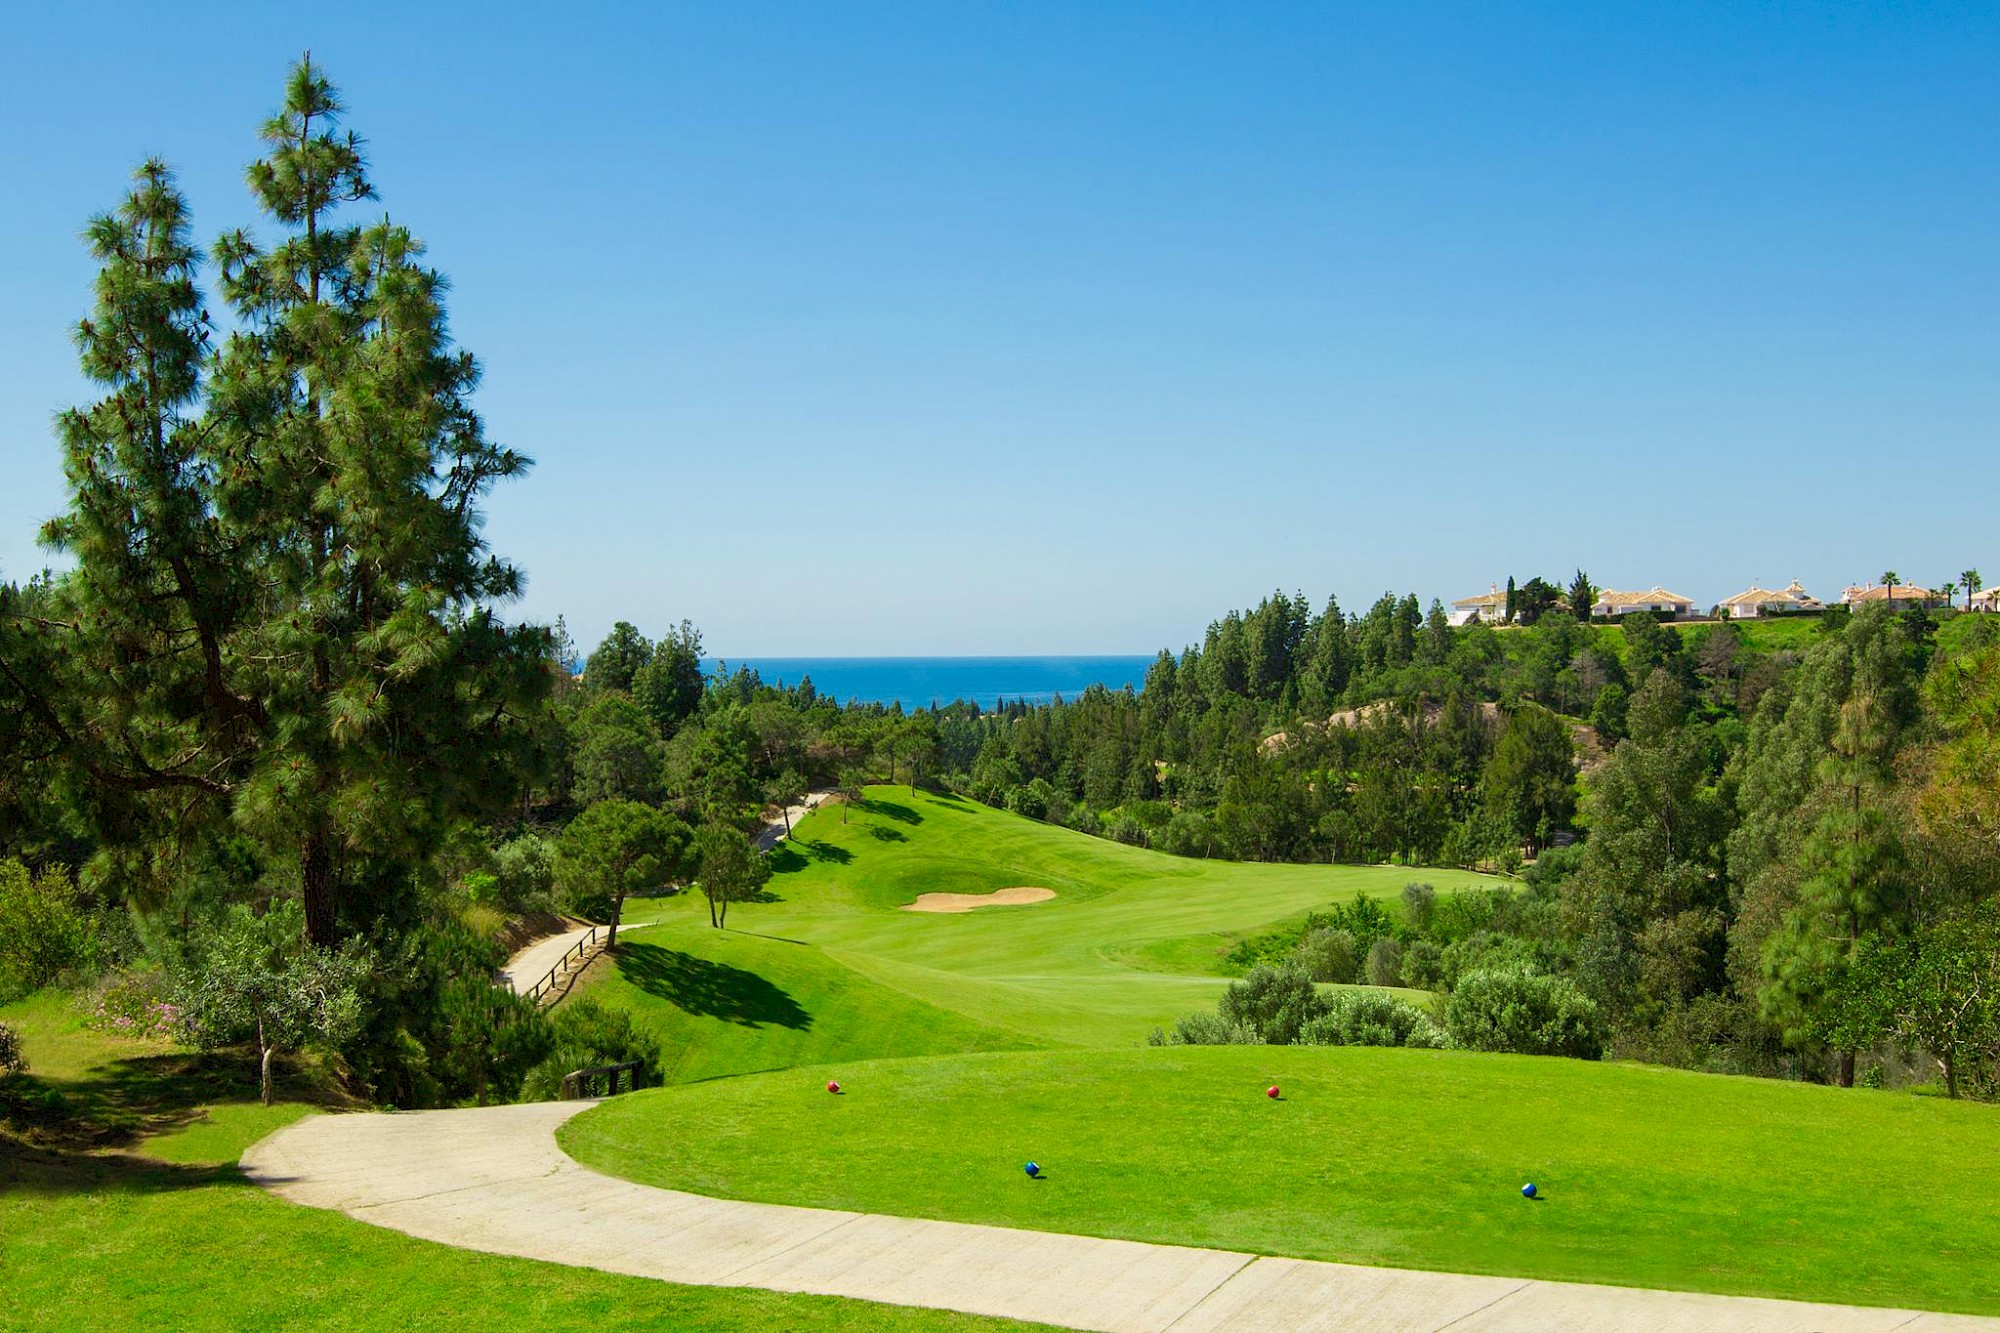 Chaparral Golf Club Golf Courses in Malaga, Spain